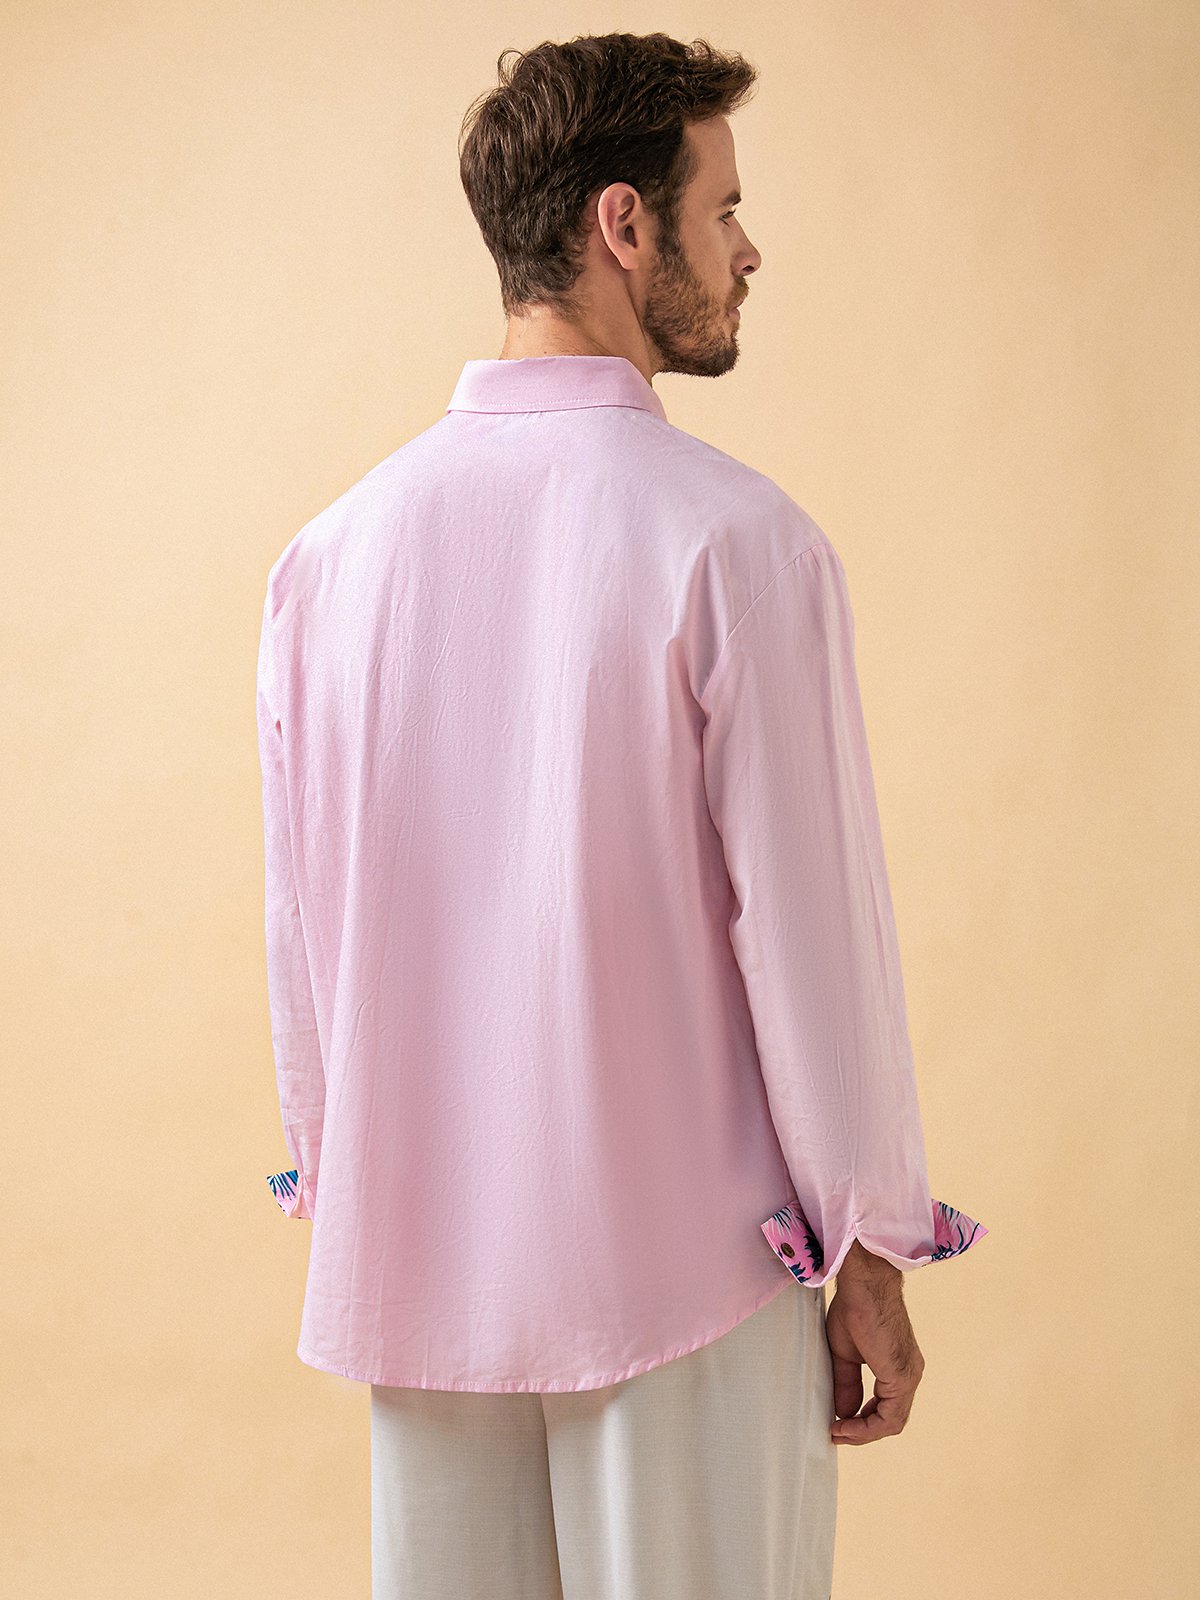 Cotton Plain Panel Floral Long Sleeves Casual Shirt